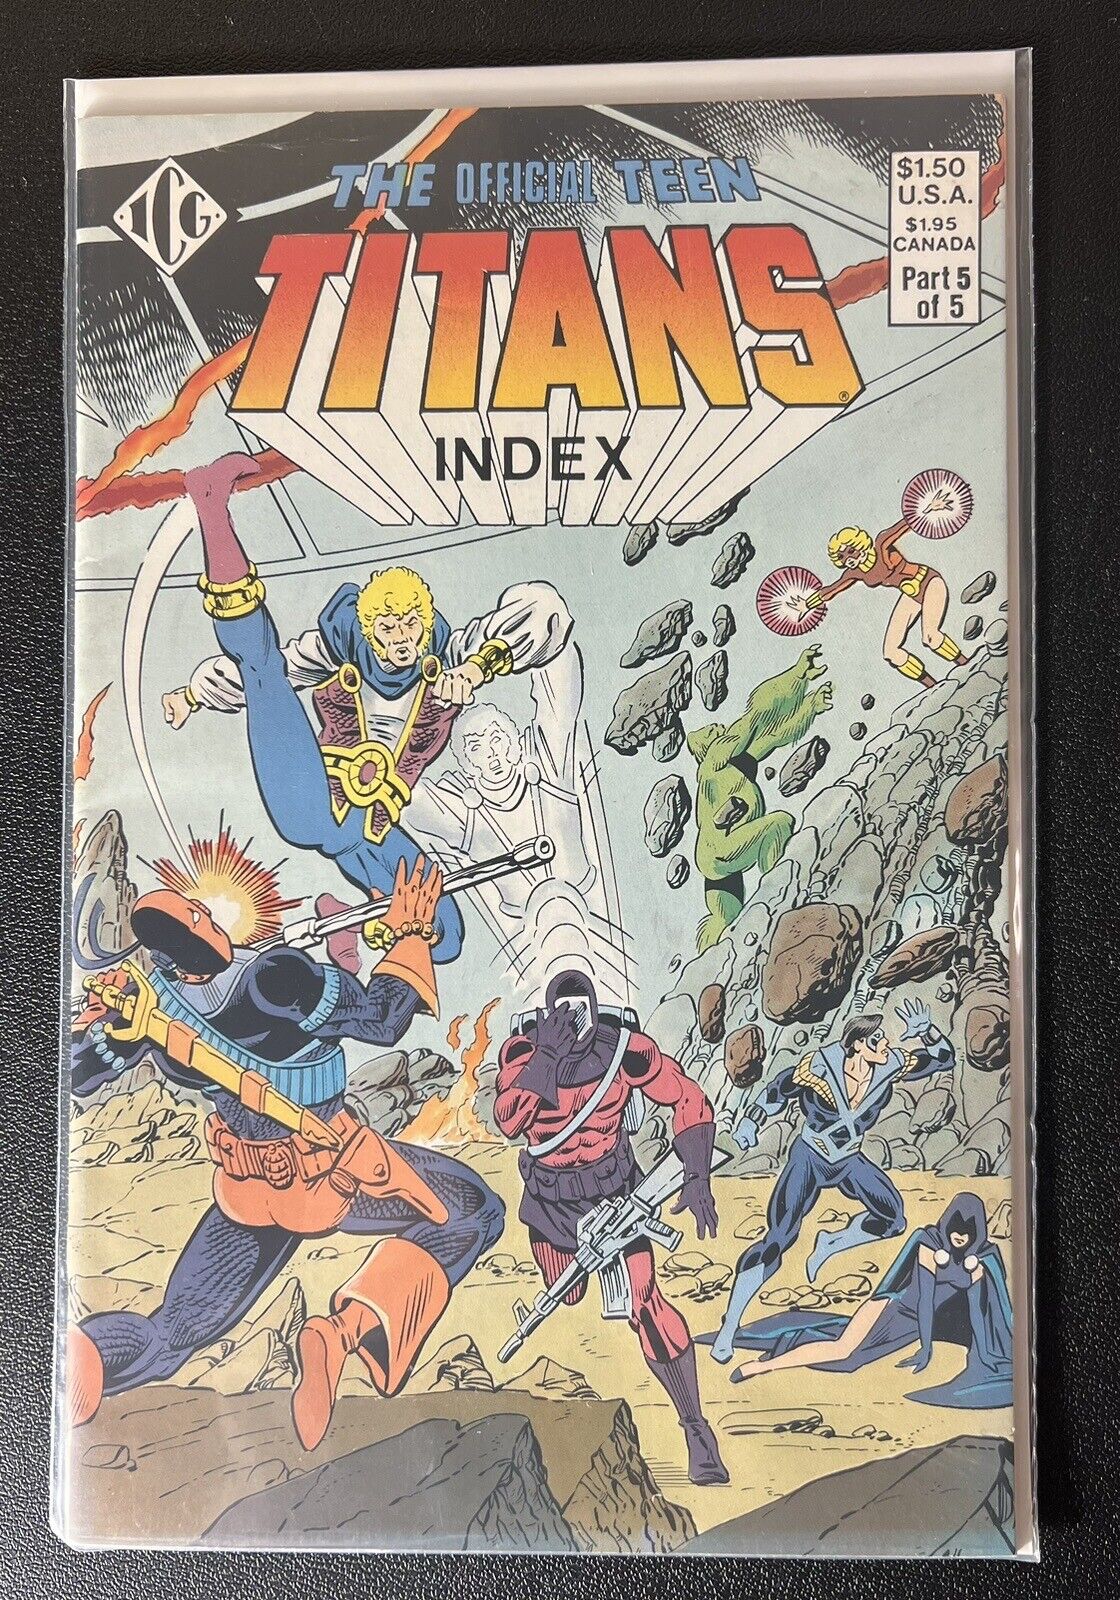 The Official Teen Titans Index No. 5 (1985, ICG)